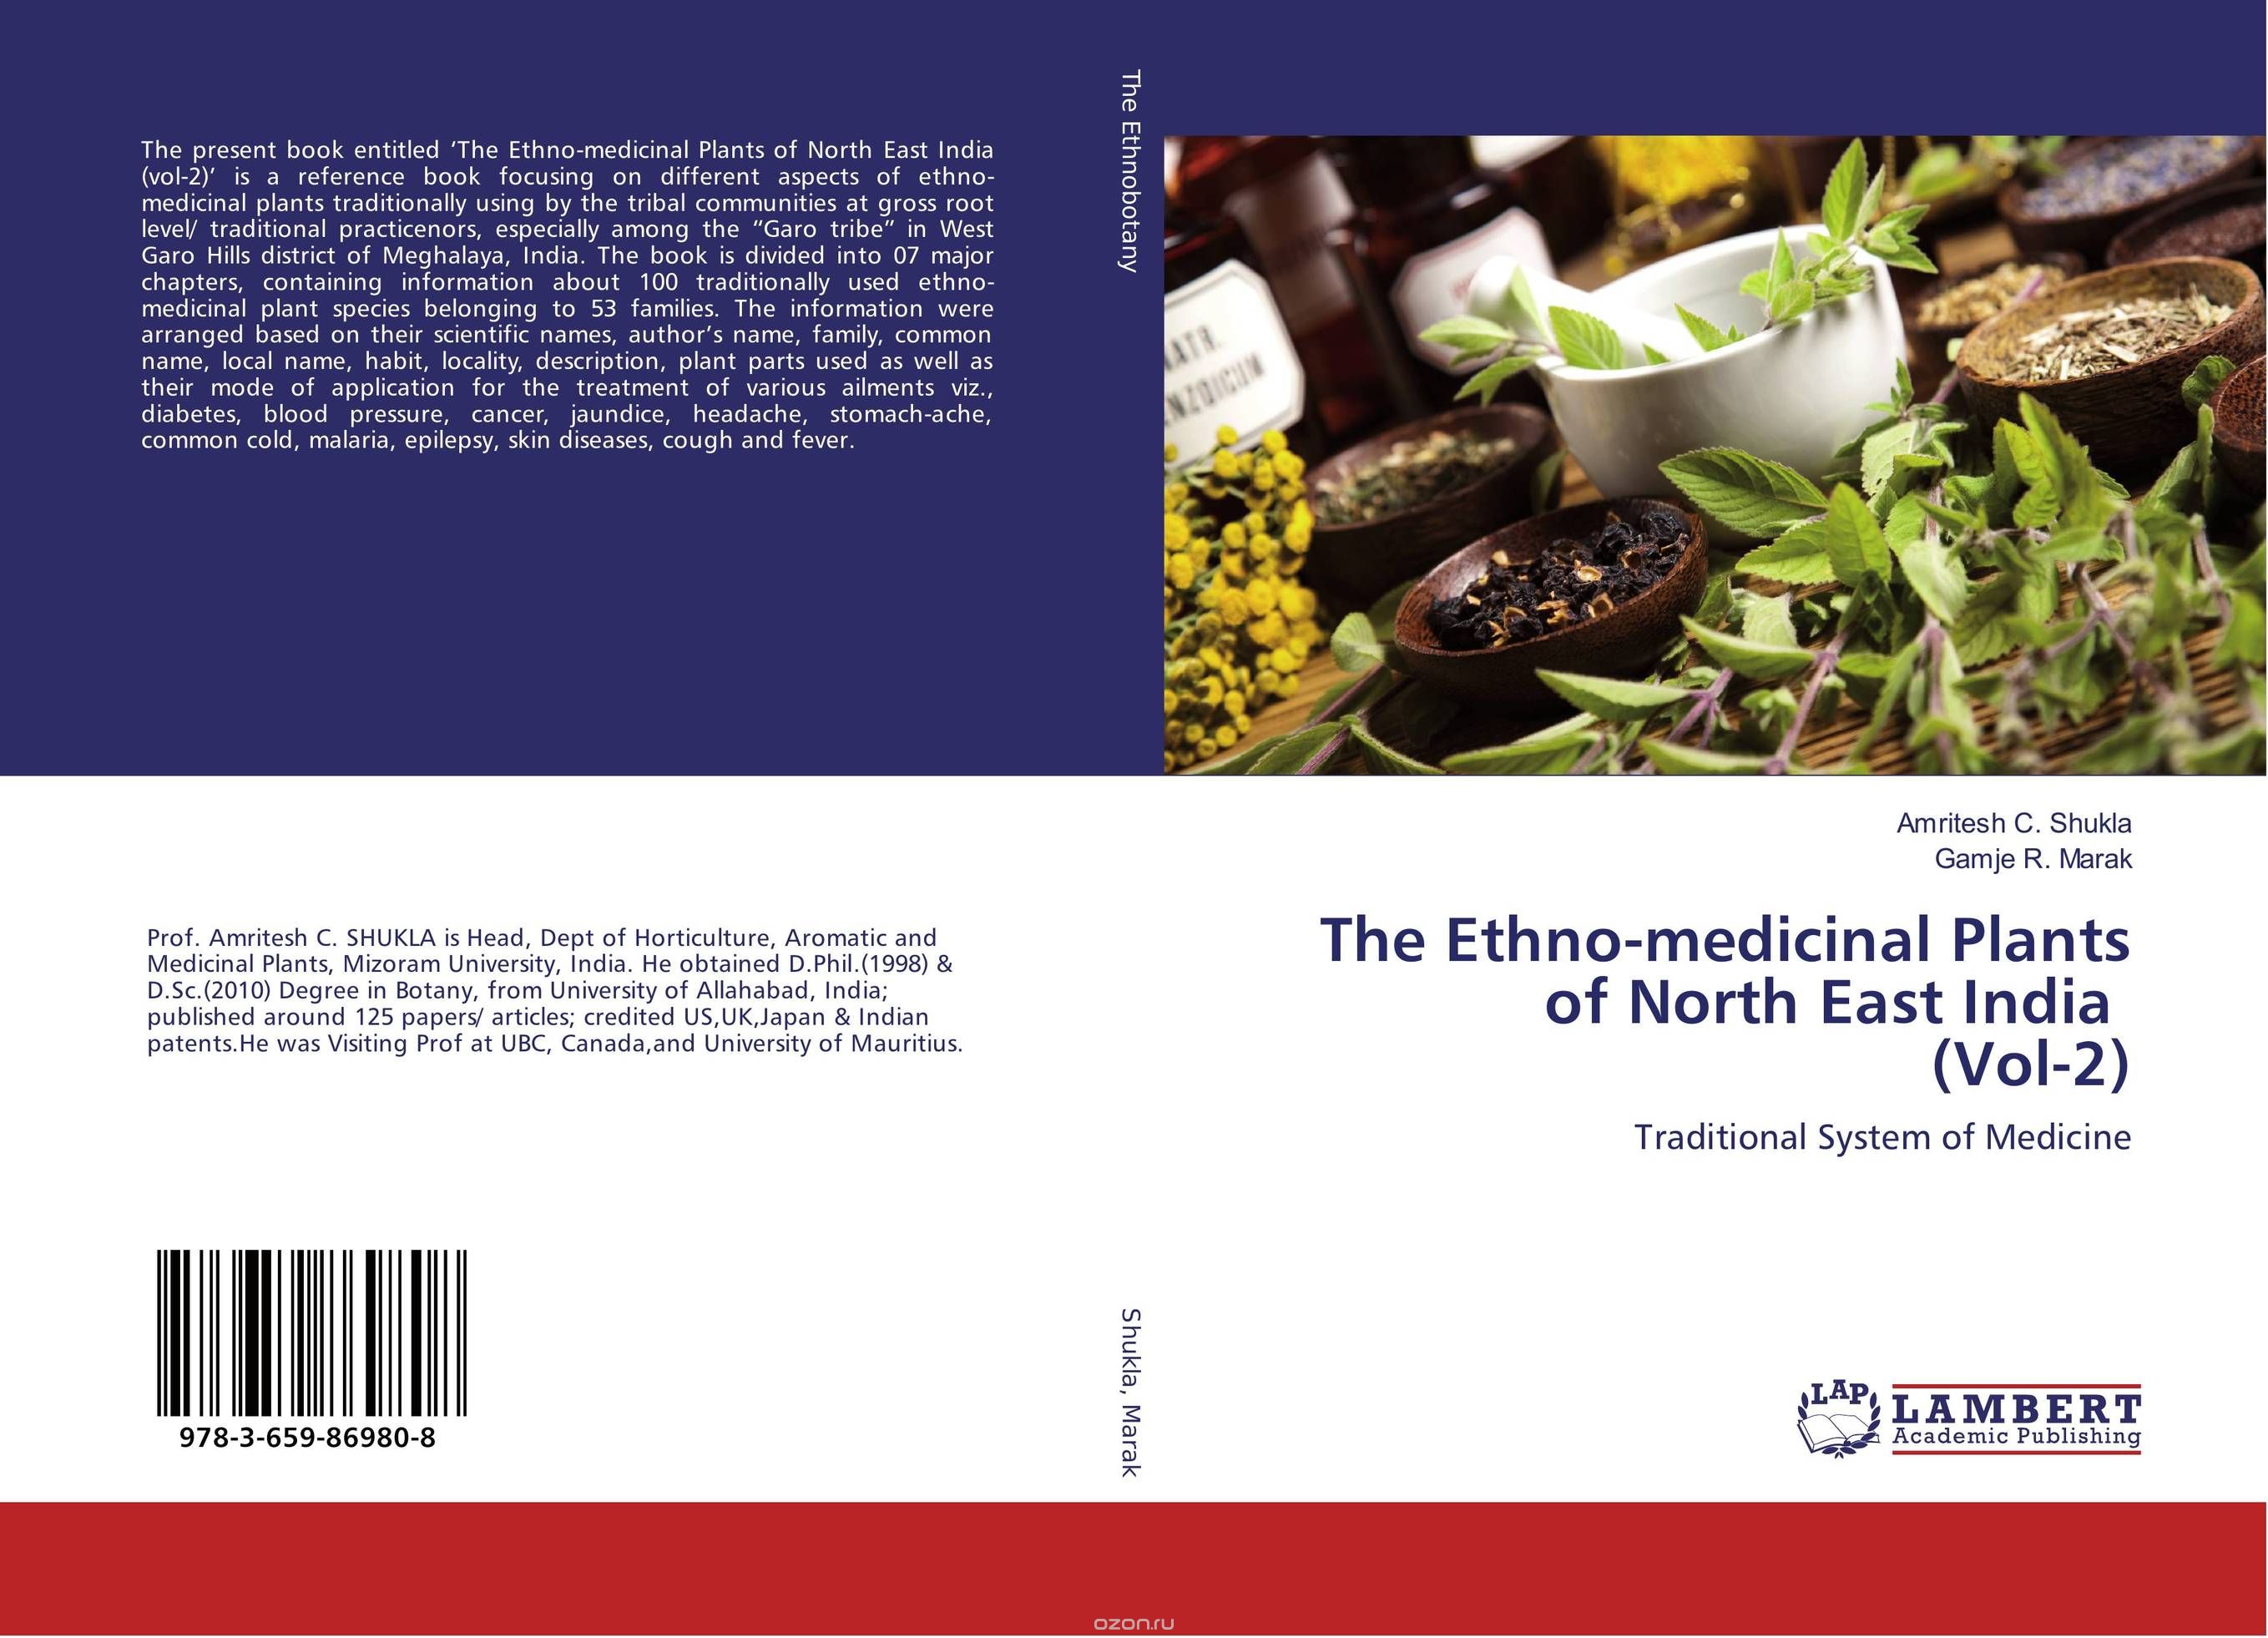 Скачать книгу "The Ethno-medicinal Plants of North East India (Vol-2)"